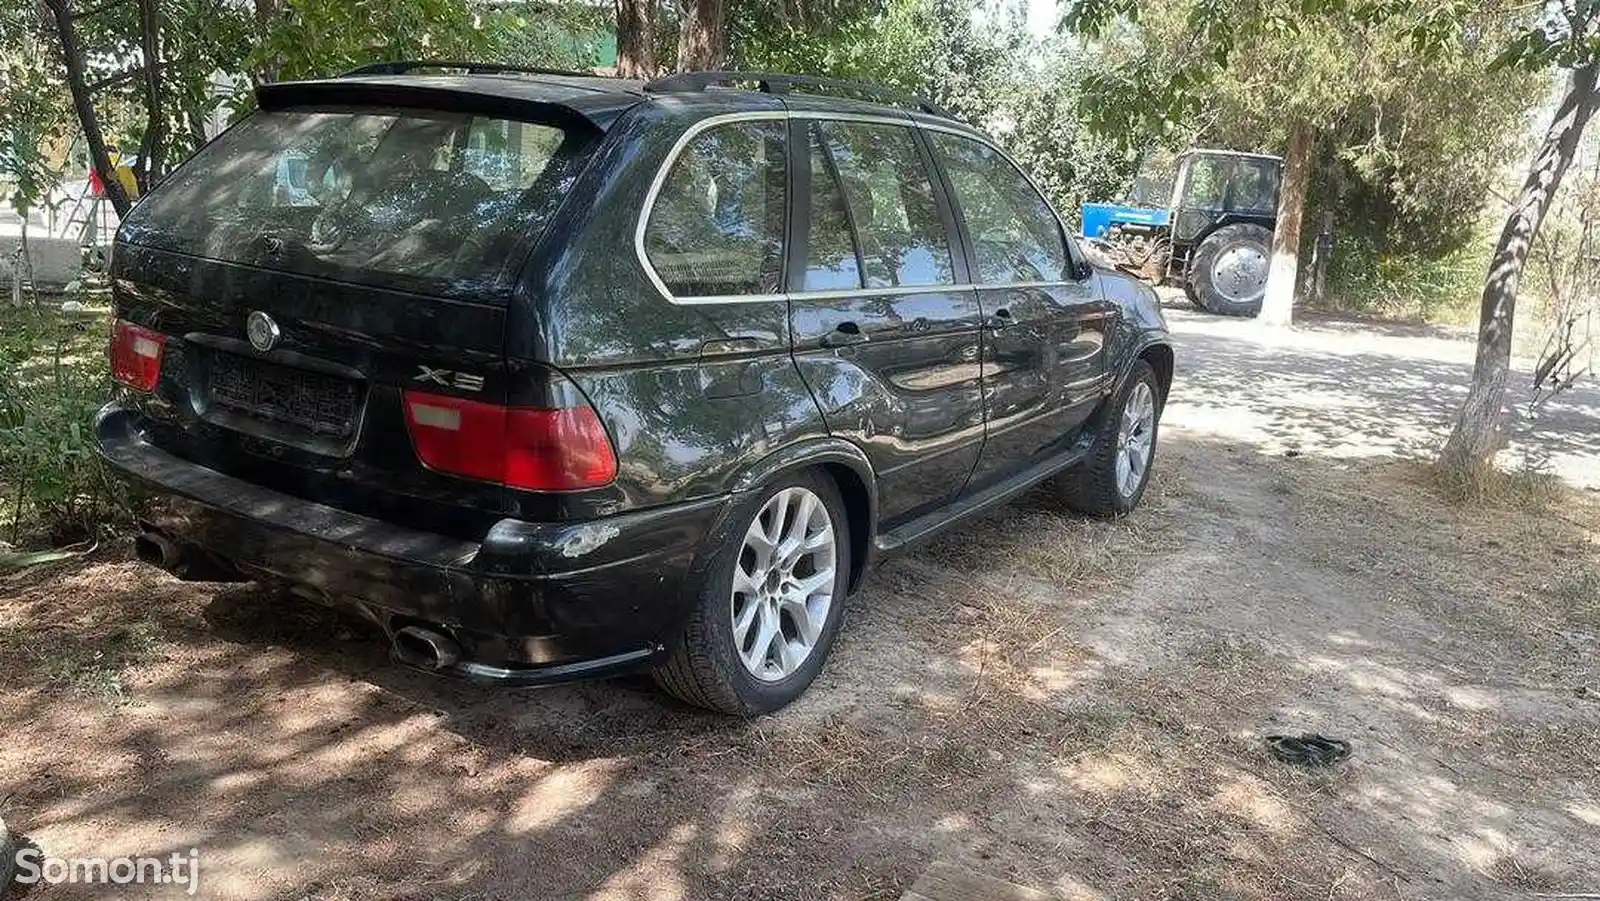 BMW 5 series, 2000-2